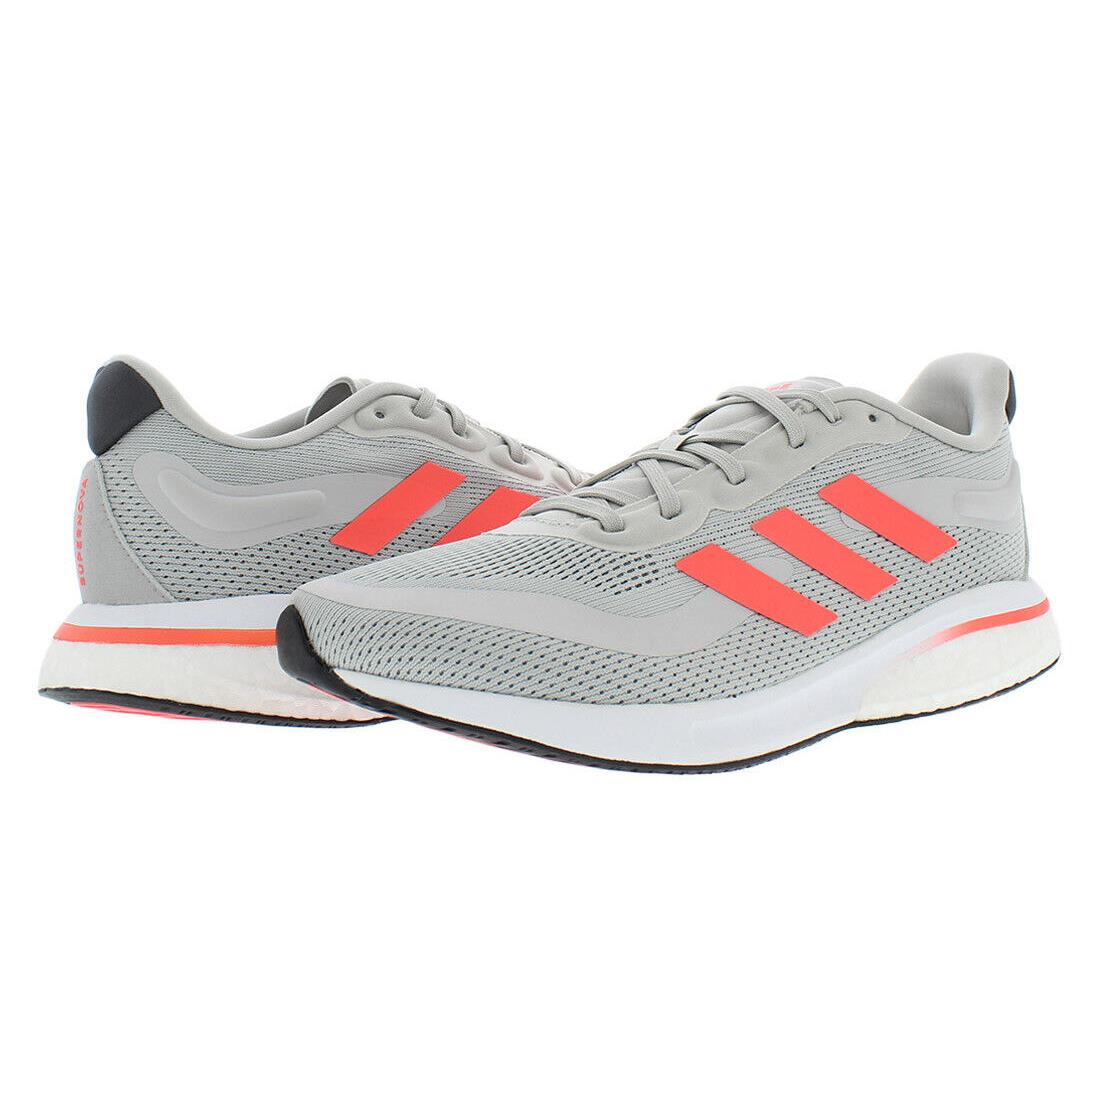 Adidas Supernova Mens Shoes - Grey/Red, Main: Grey